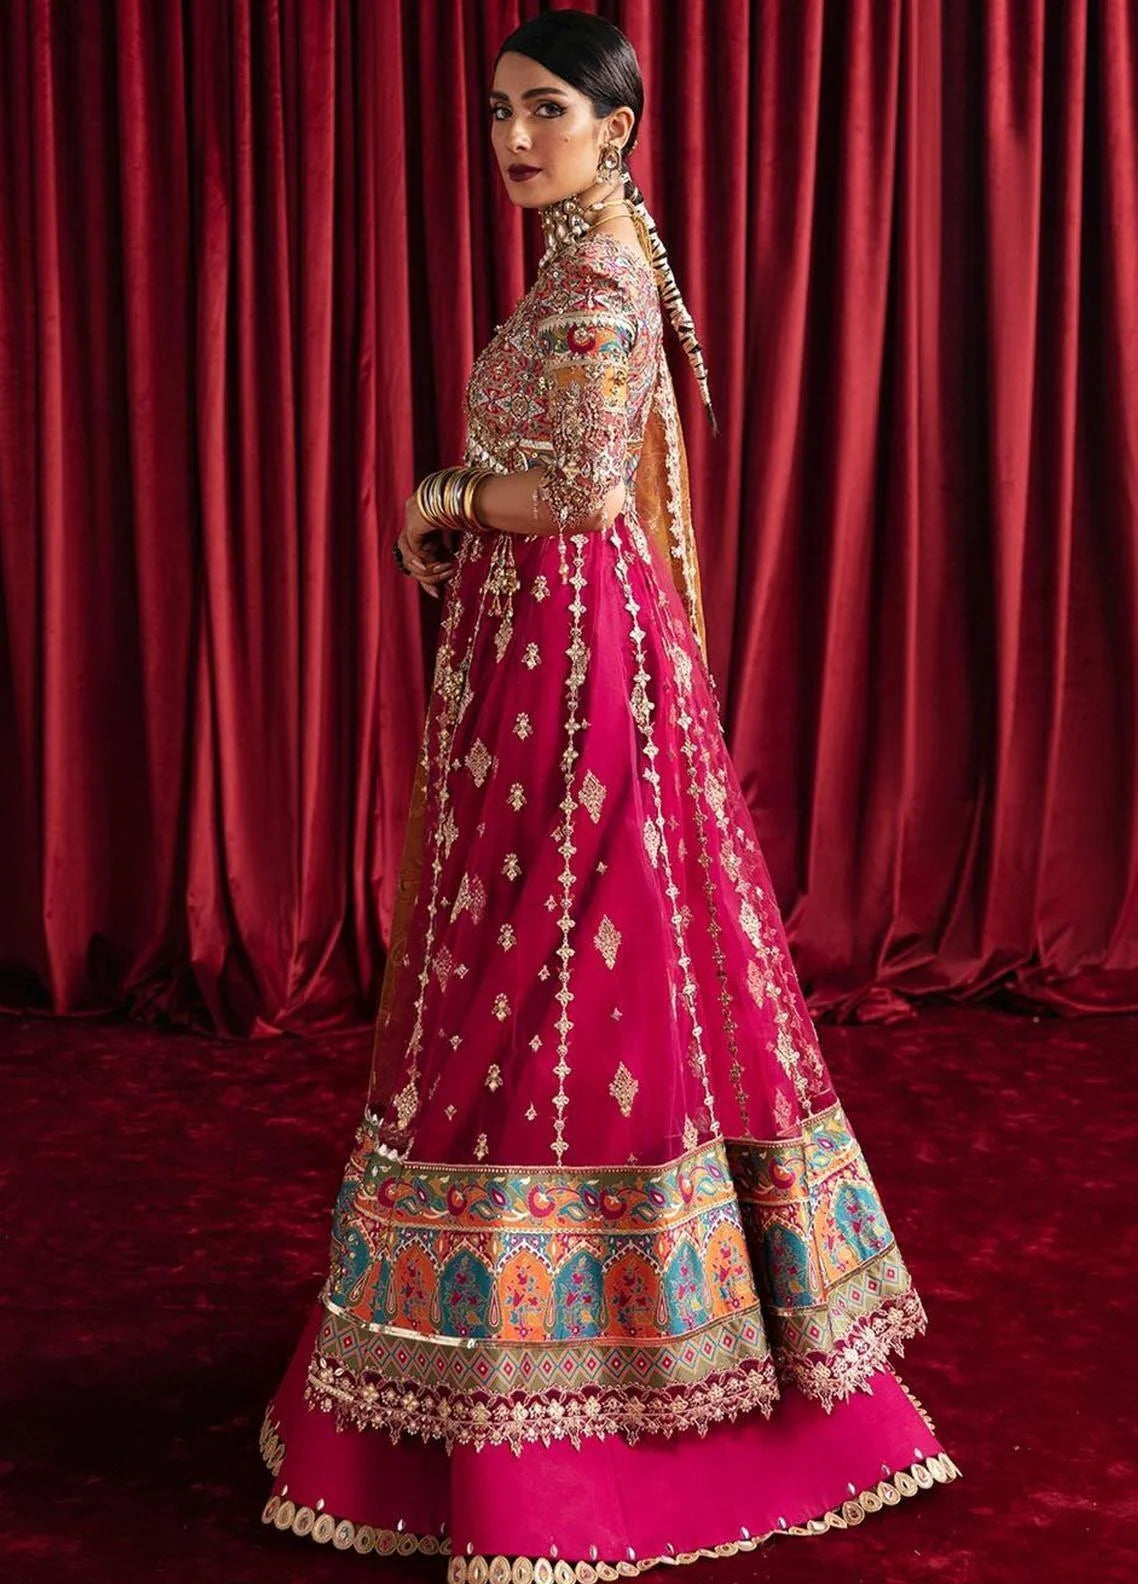 Qalamkar Formal Leela Inspired Embroidered 3 Piece Wedding Outfit - Desi Posh